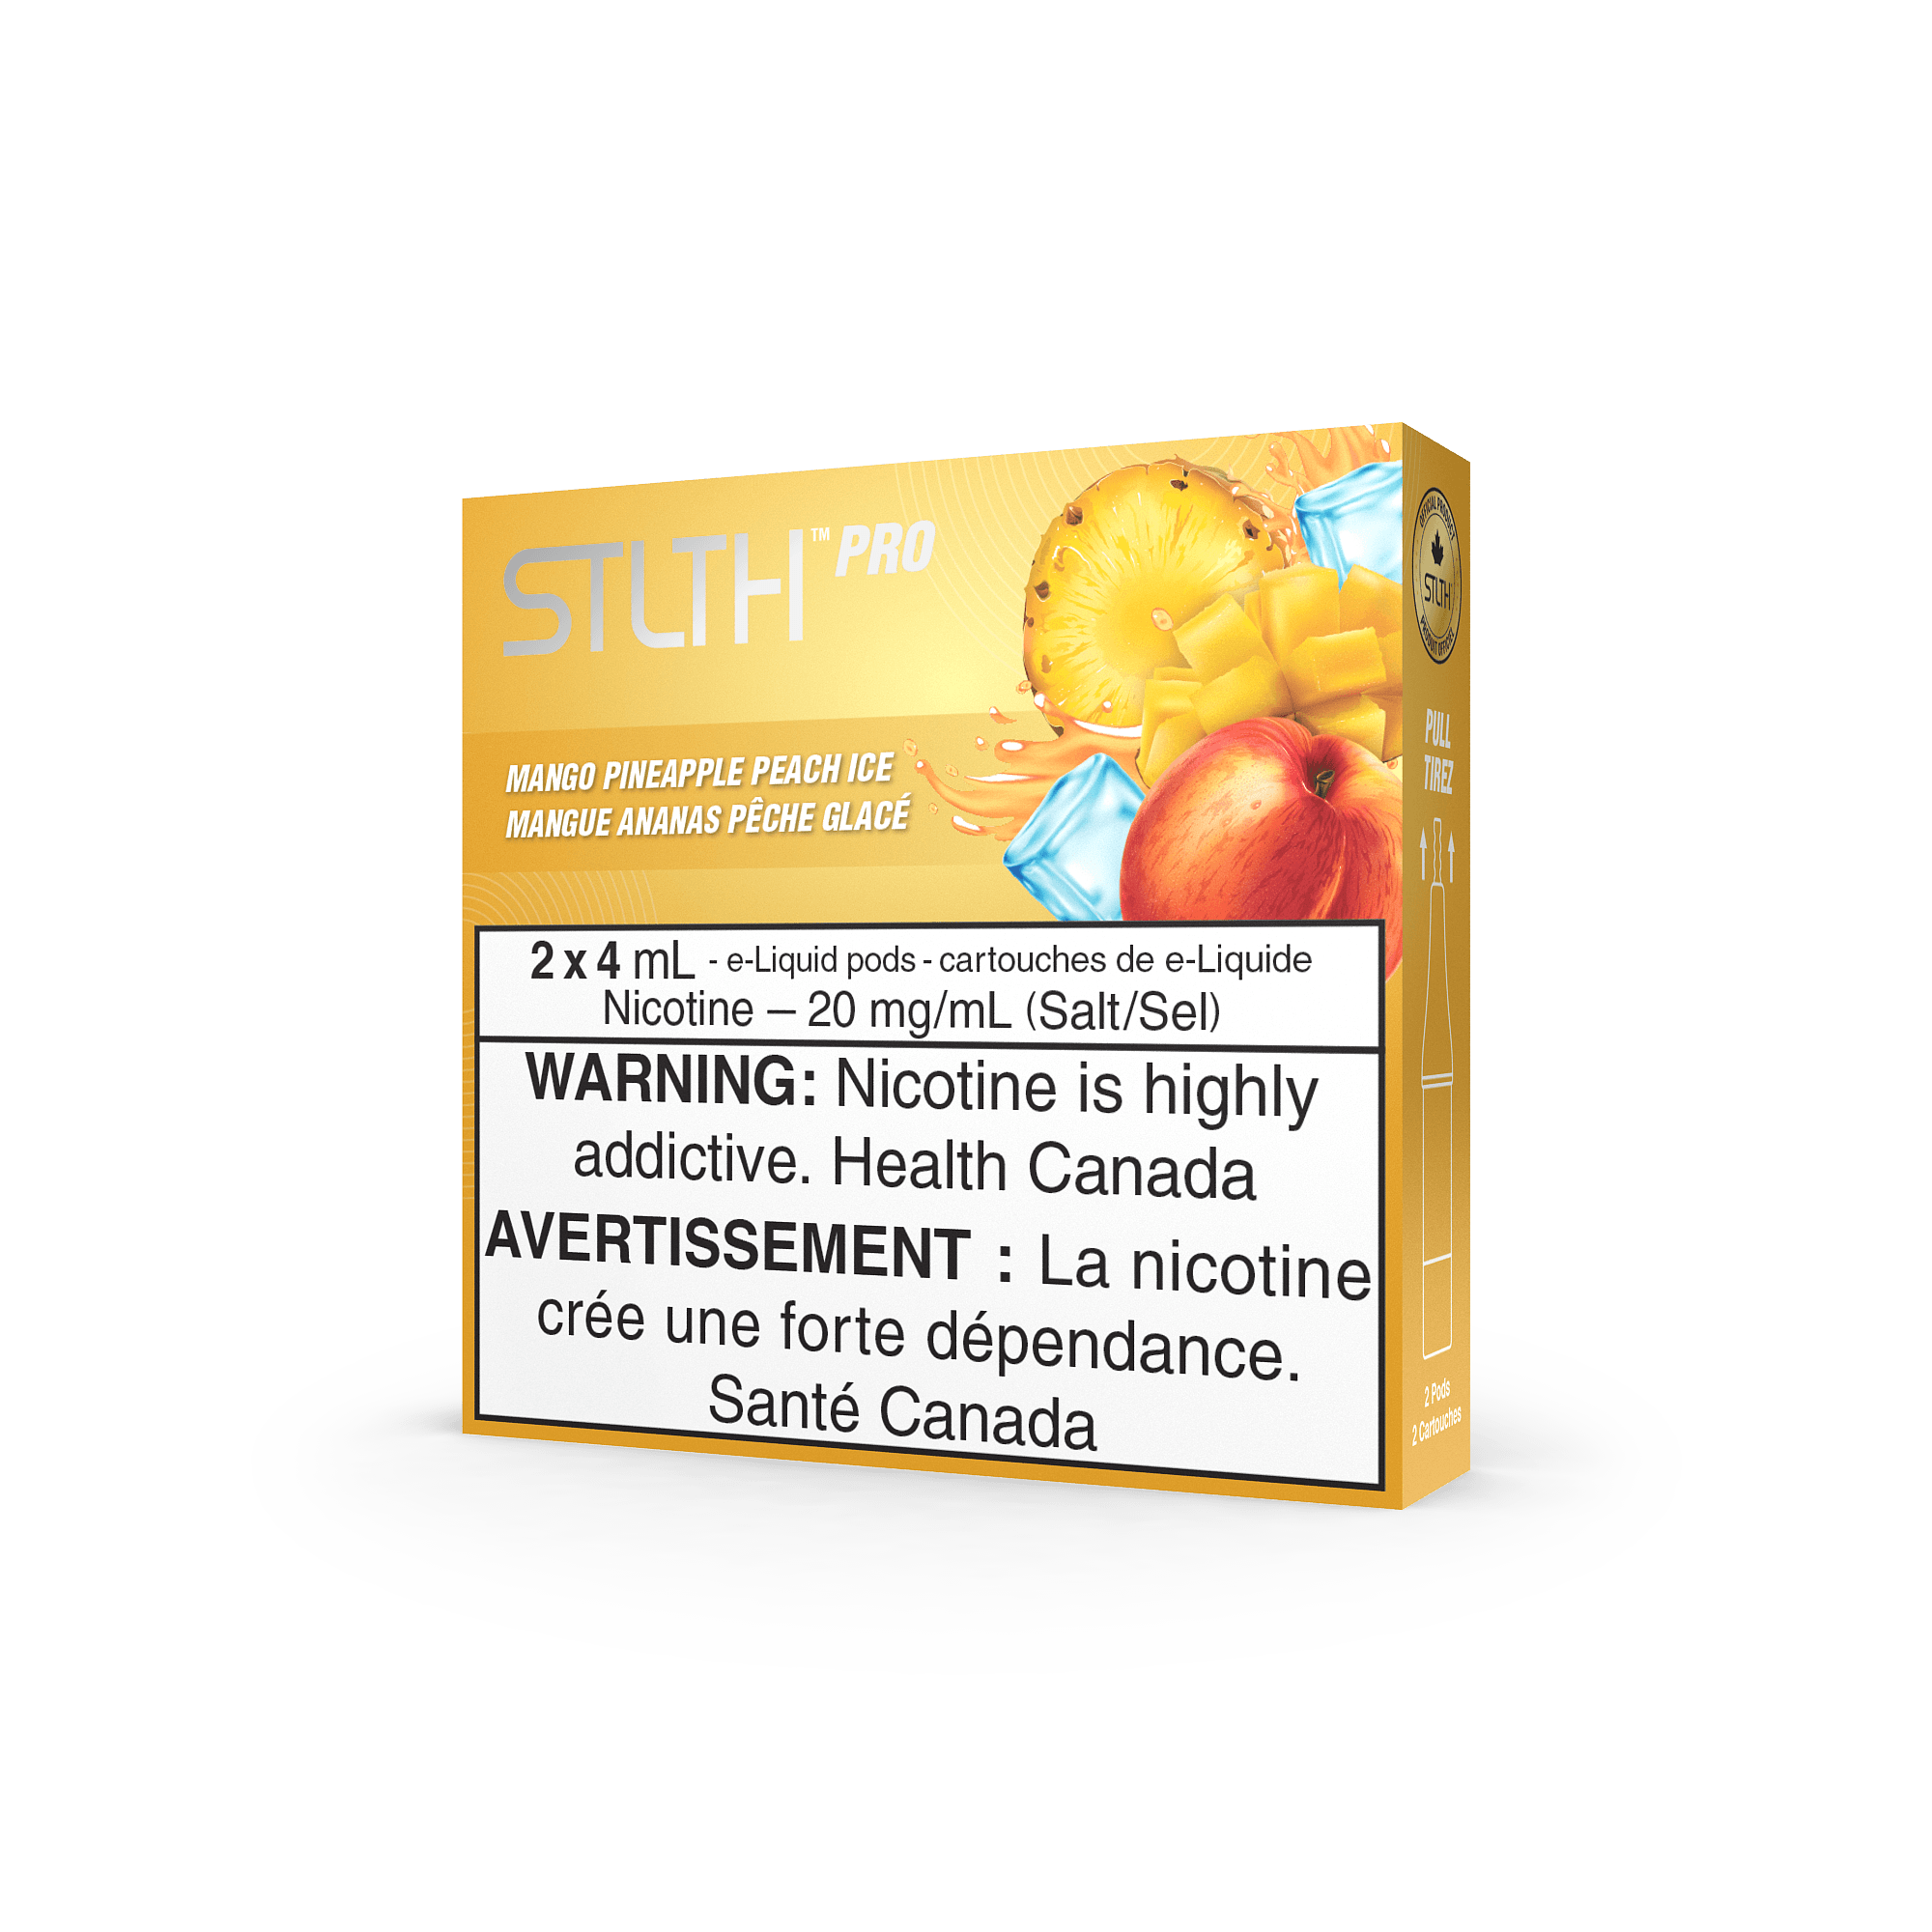 STLTH Pro - Mango Pineapple Peach Ice - Vapor Shoppe